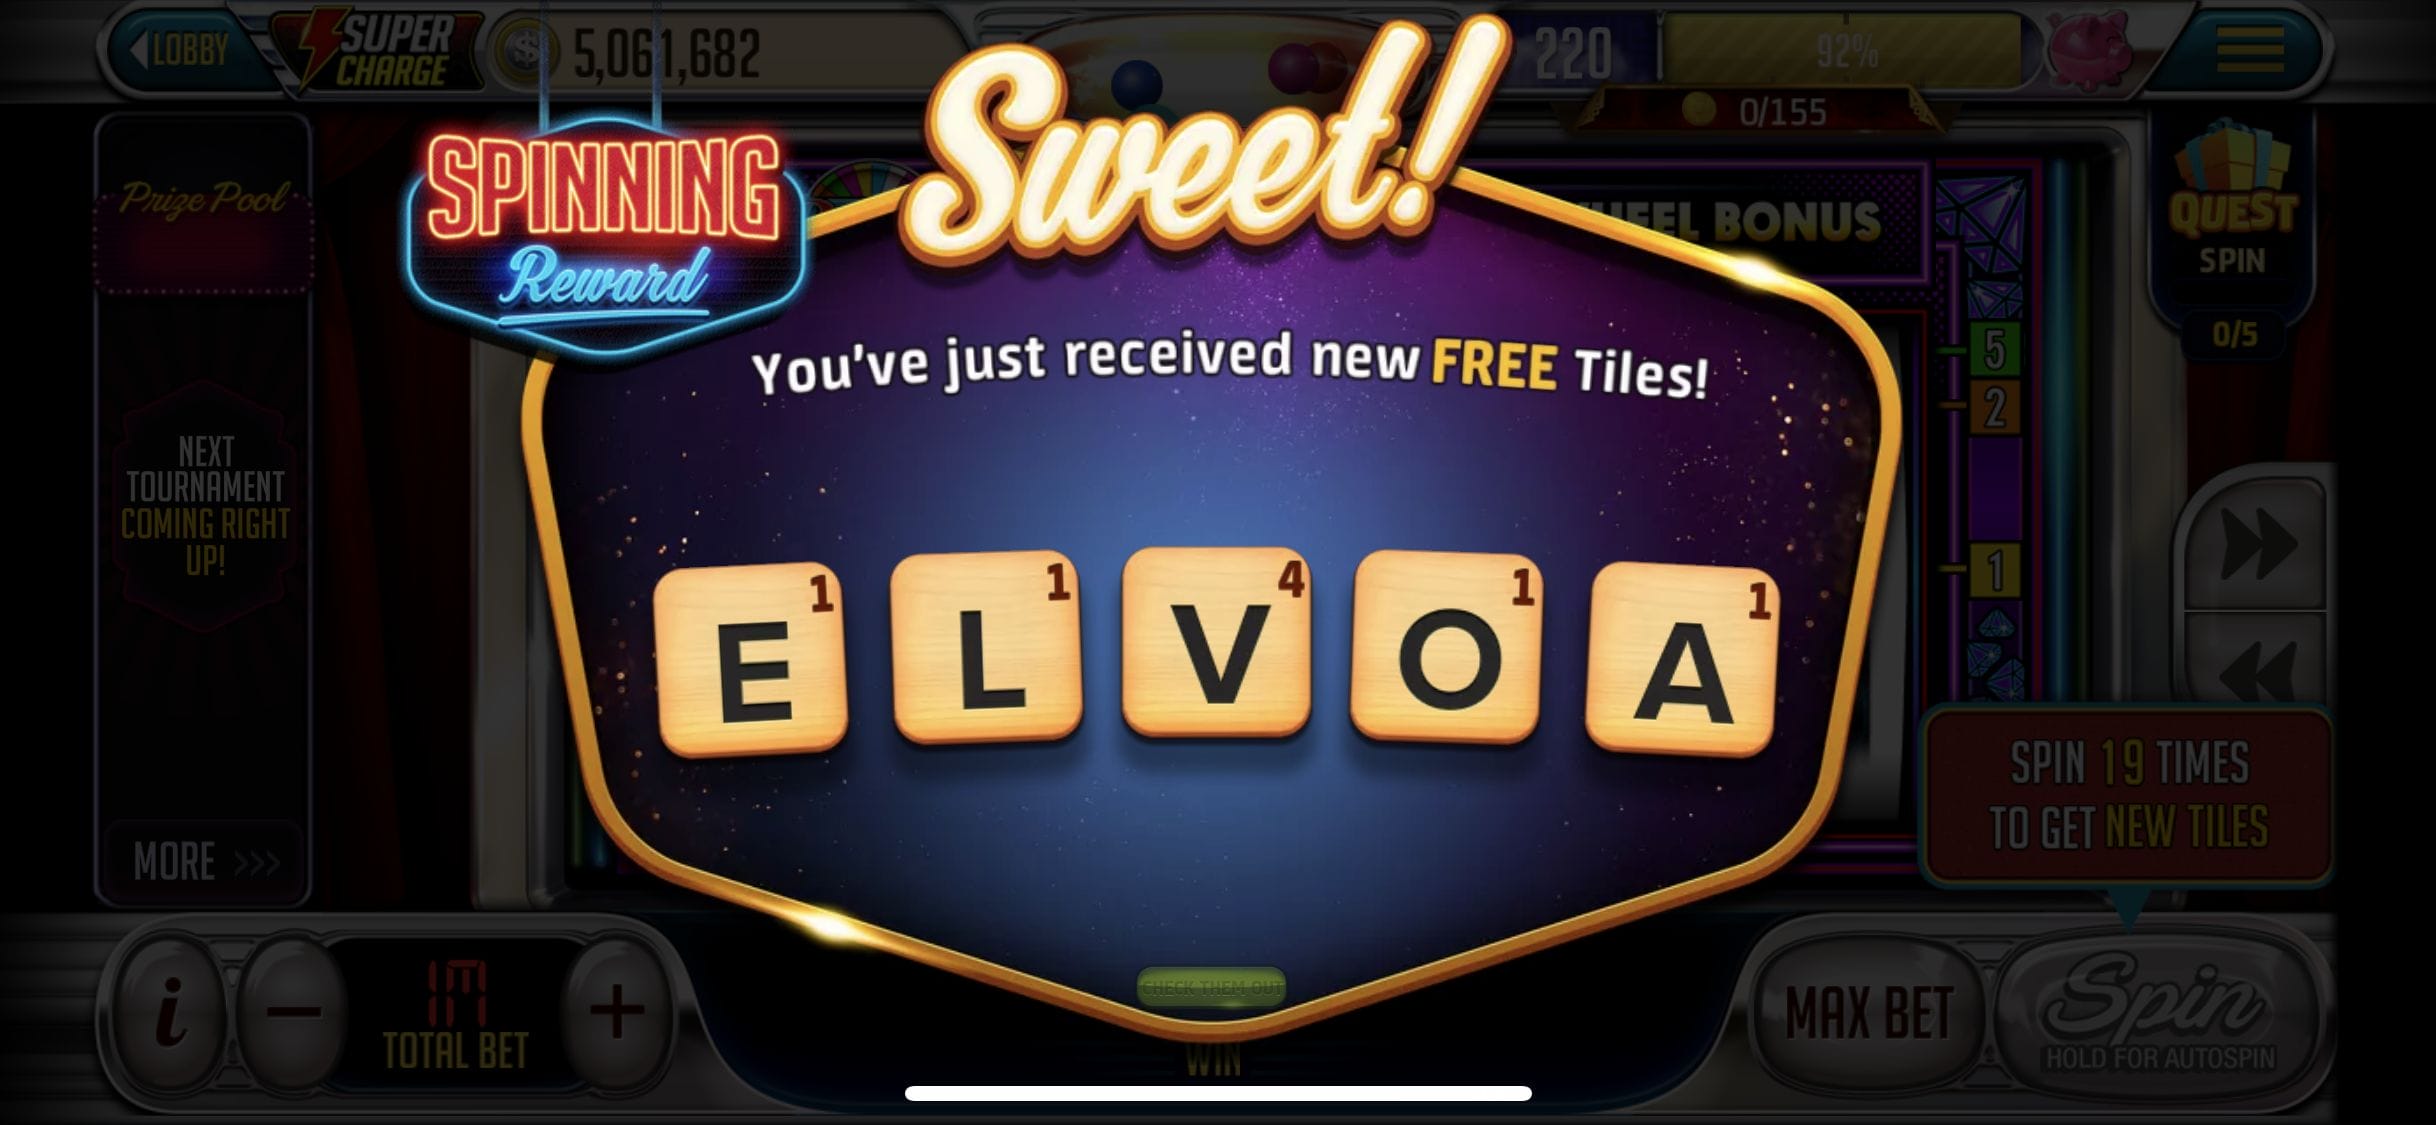 5 letter word casino